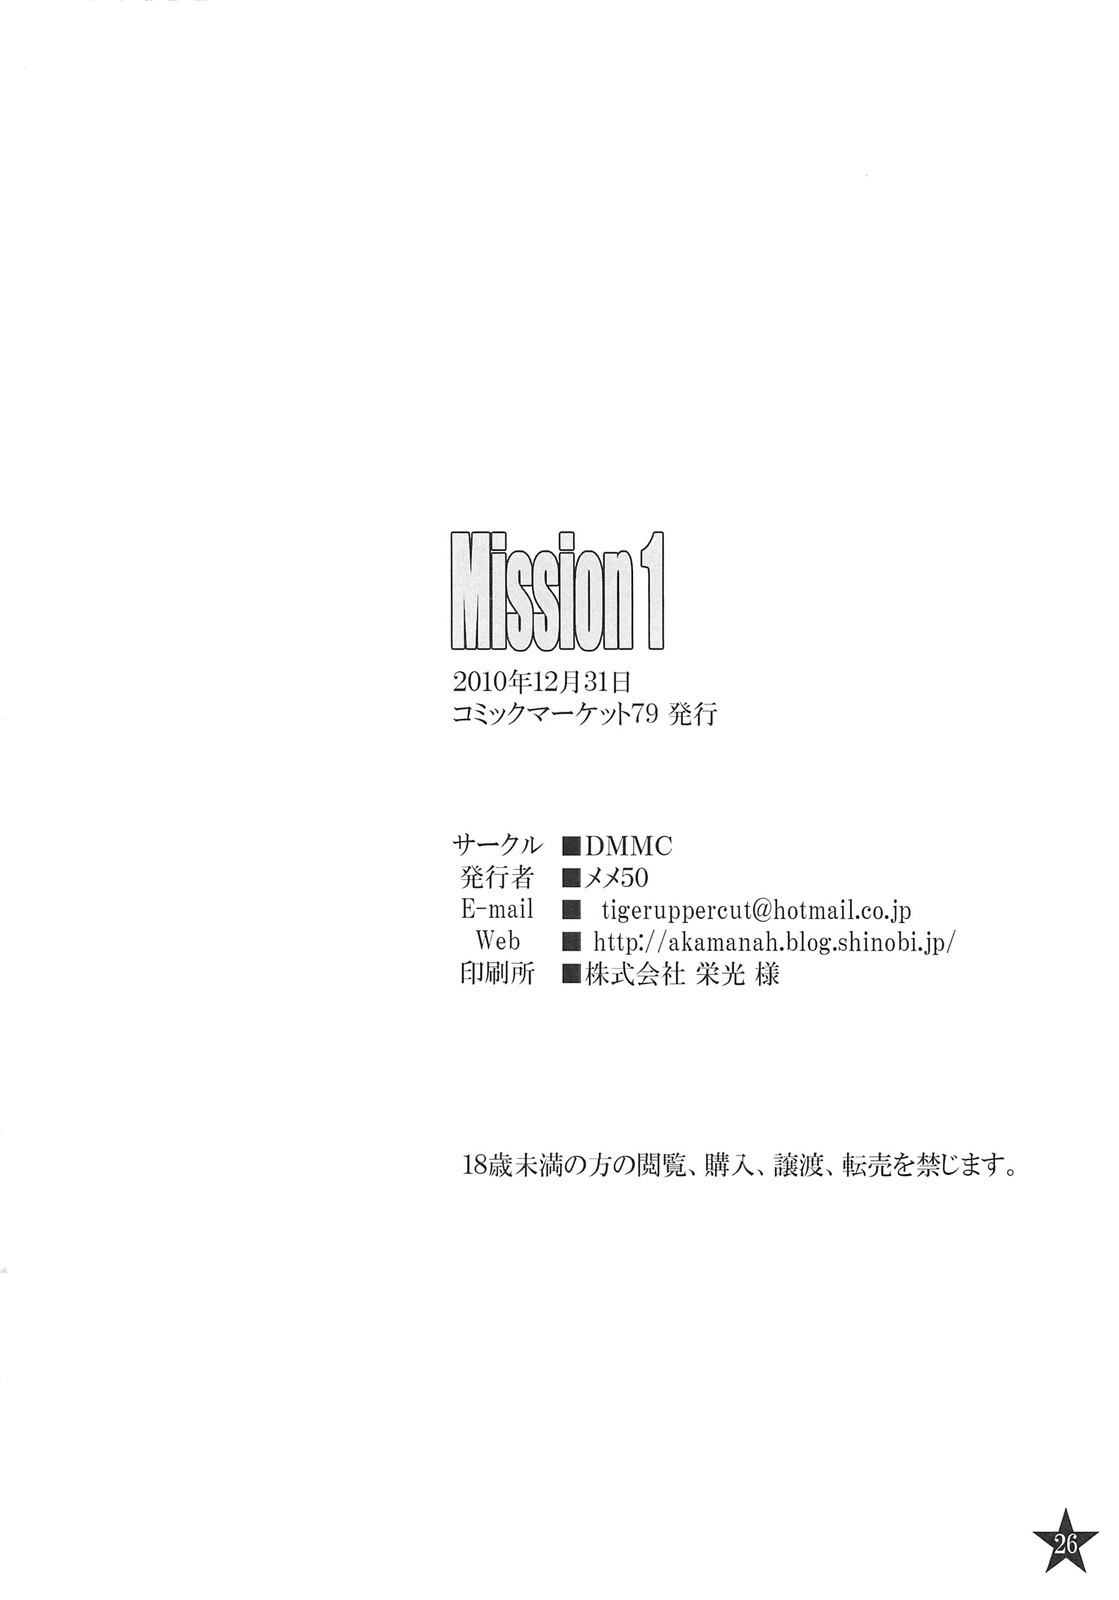 Mission 1 numero d'image 24